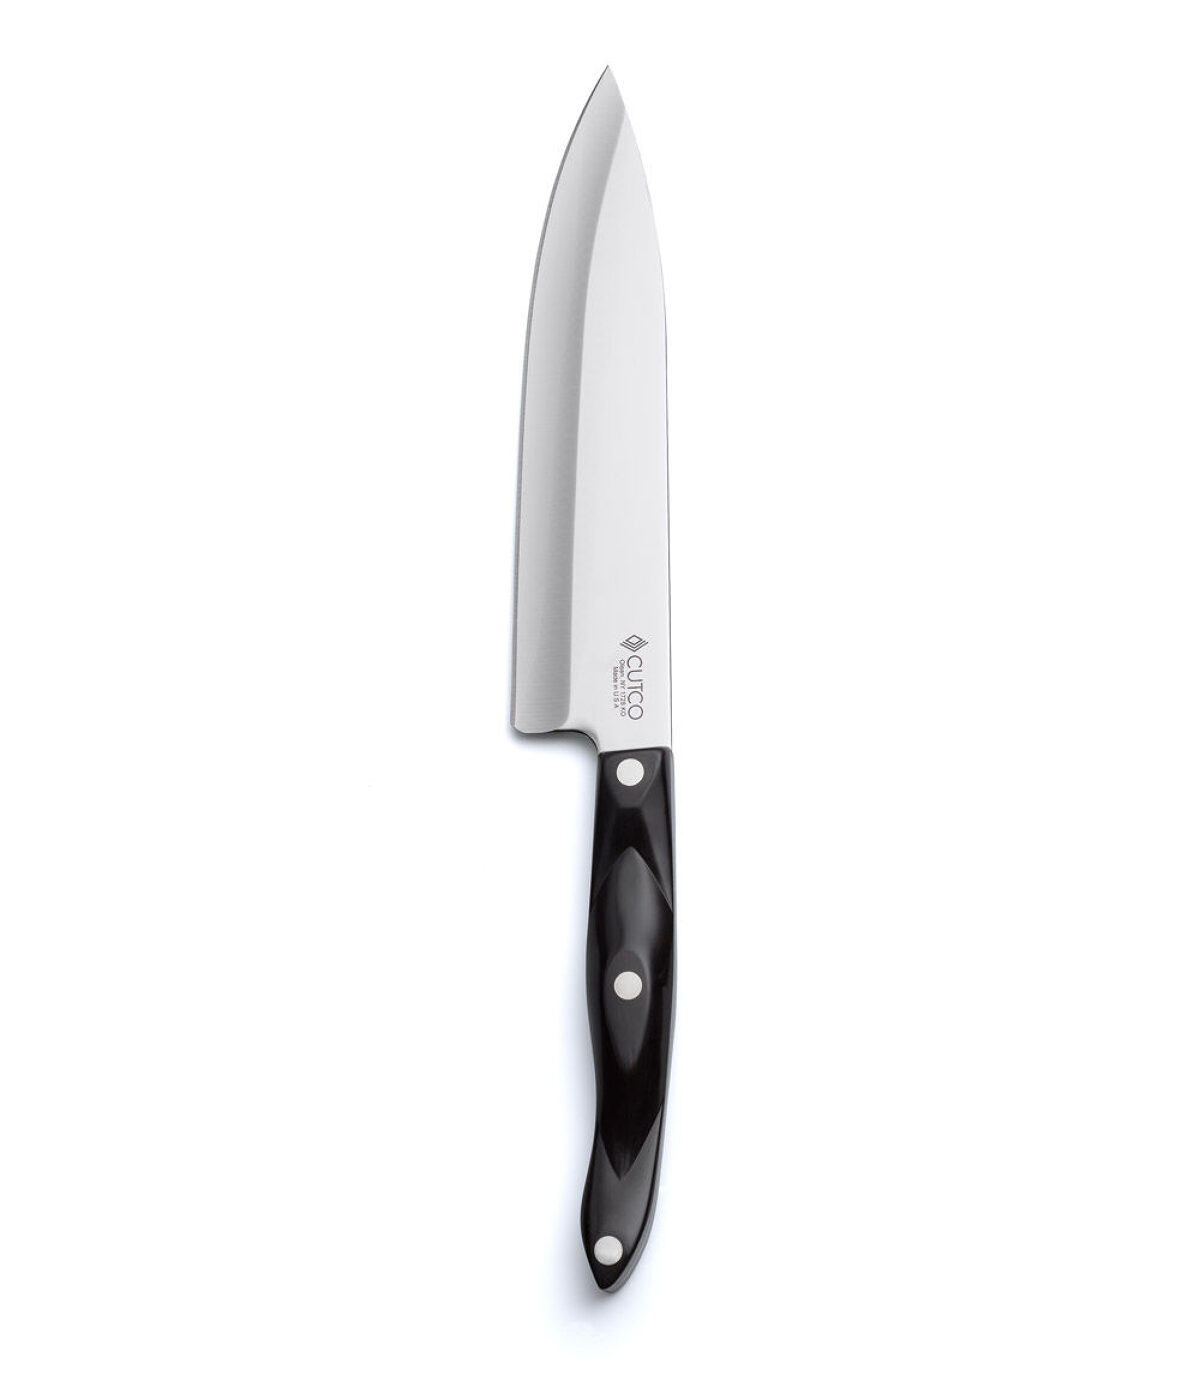 Cutco 7-5/8 Petite Chef Knife, Cutco 1728 Made in USA, Kitchen